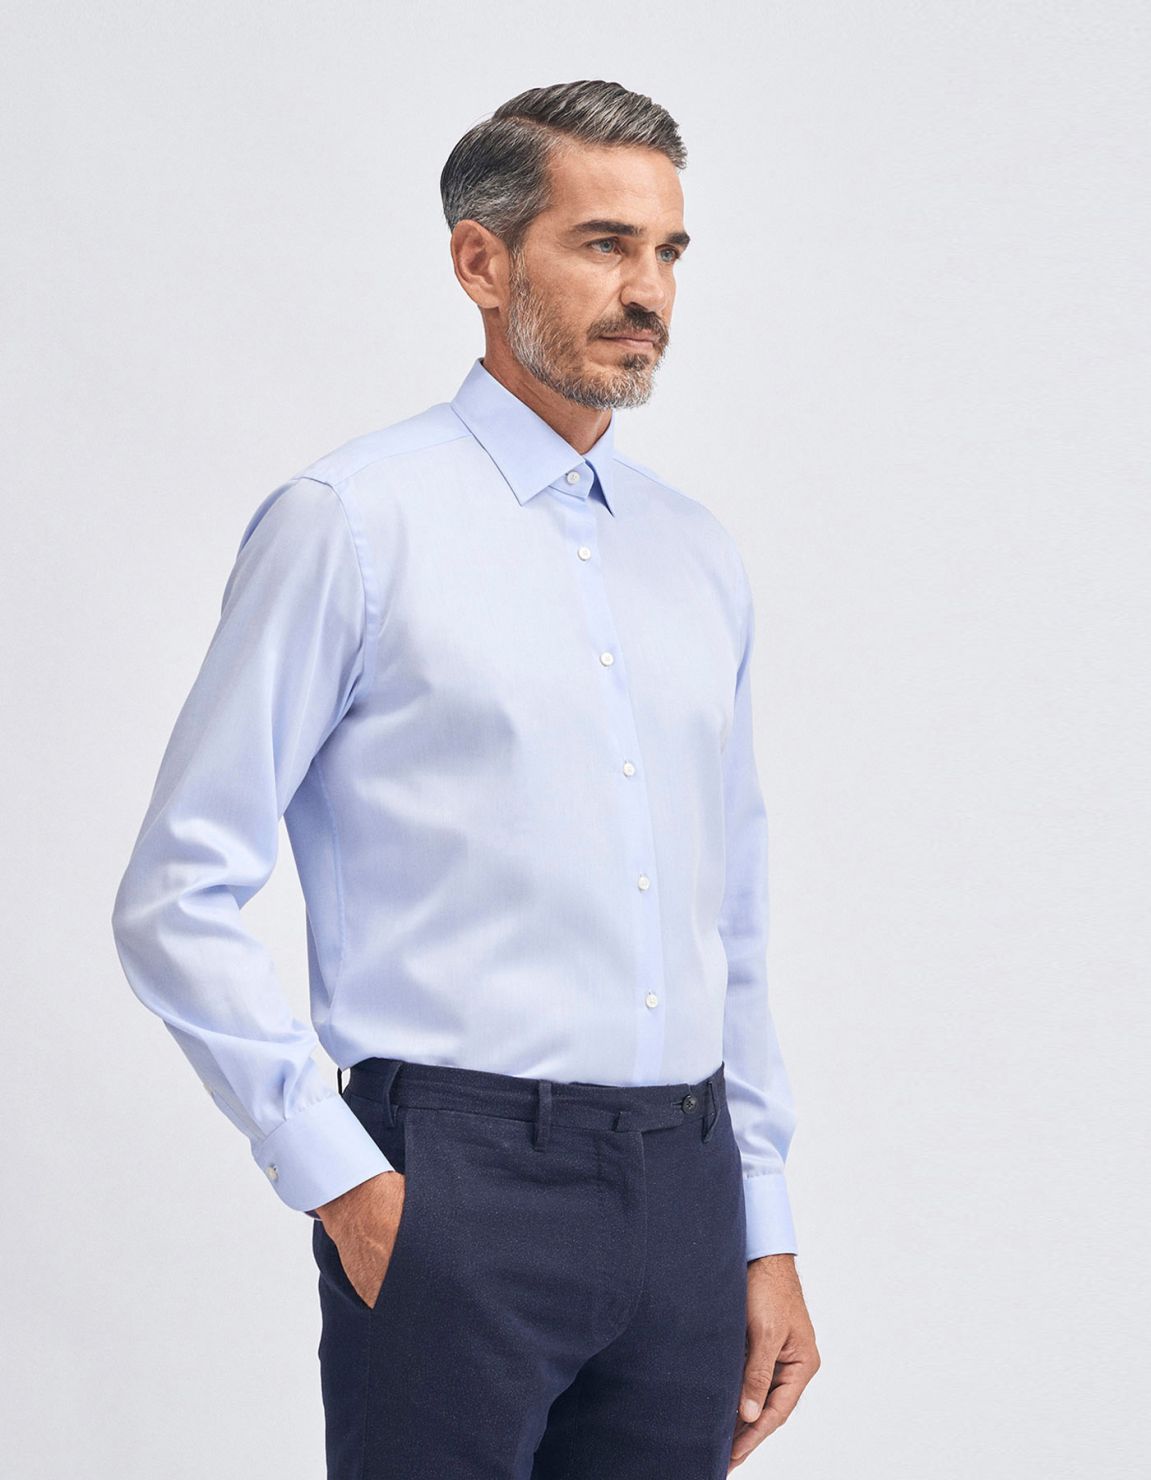 Shirt Collar spread Light Blue Twill Evolution Classic Fit 1